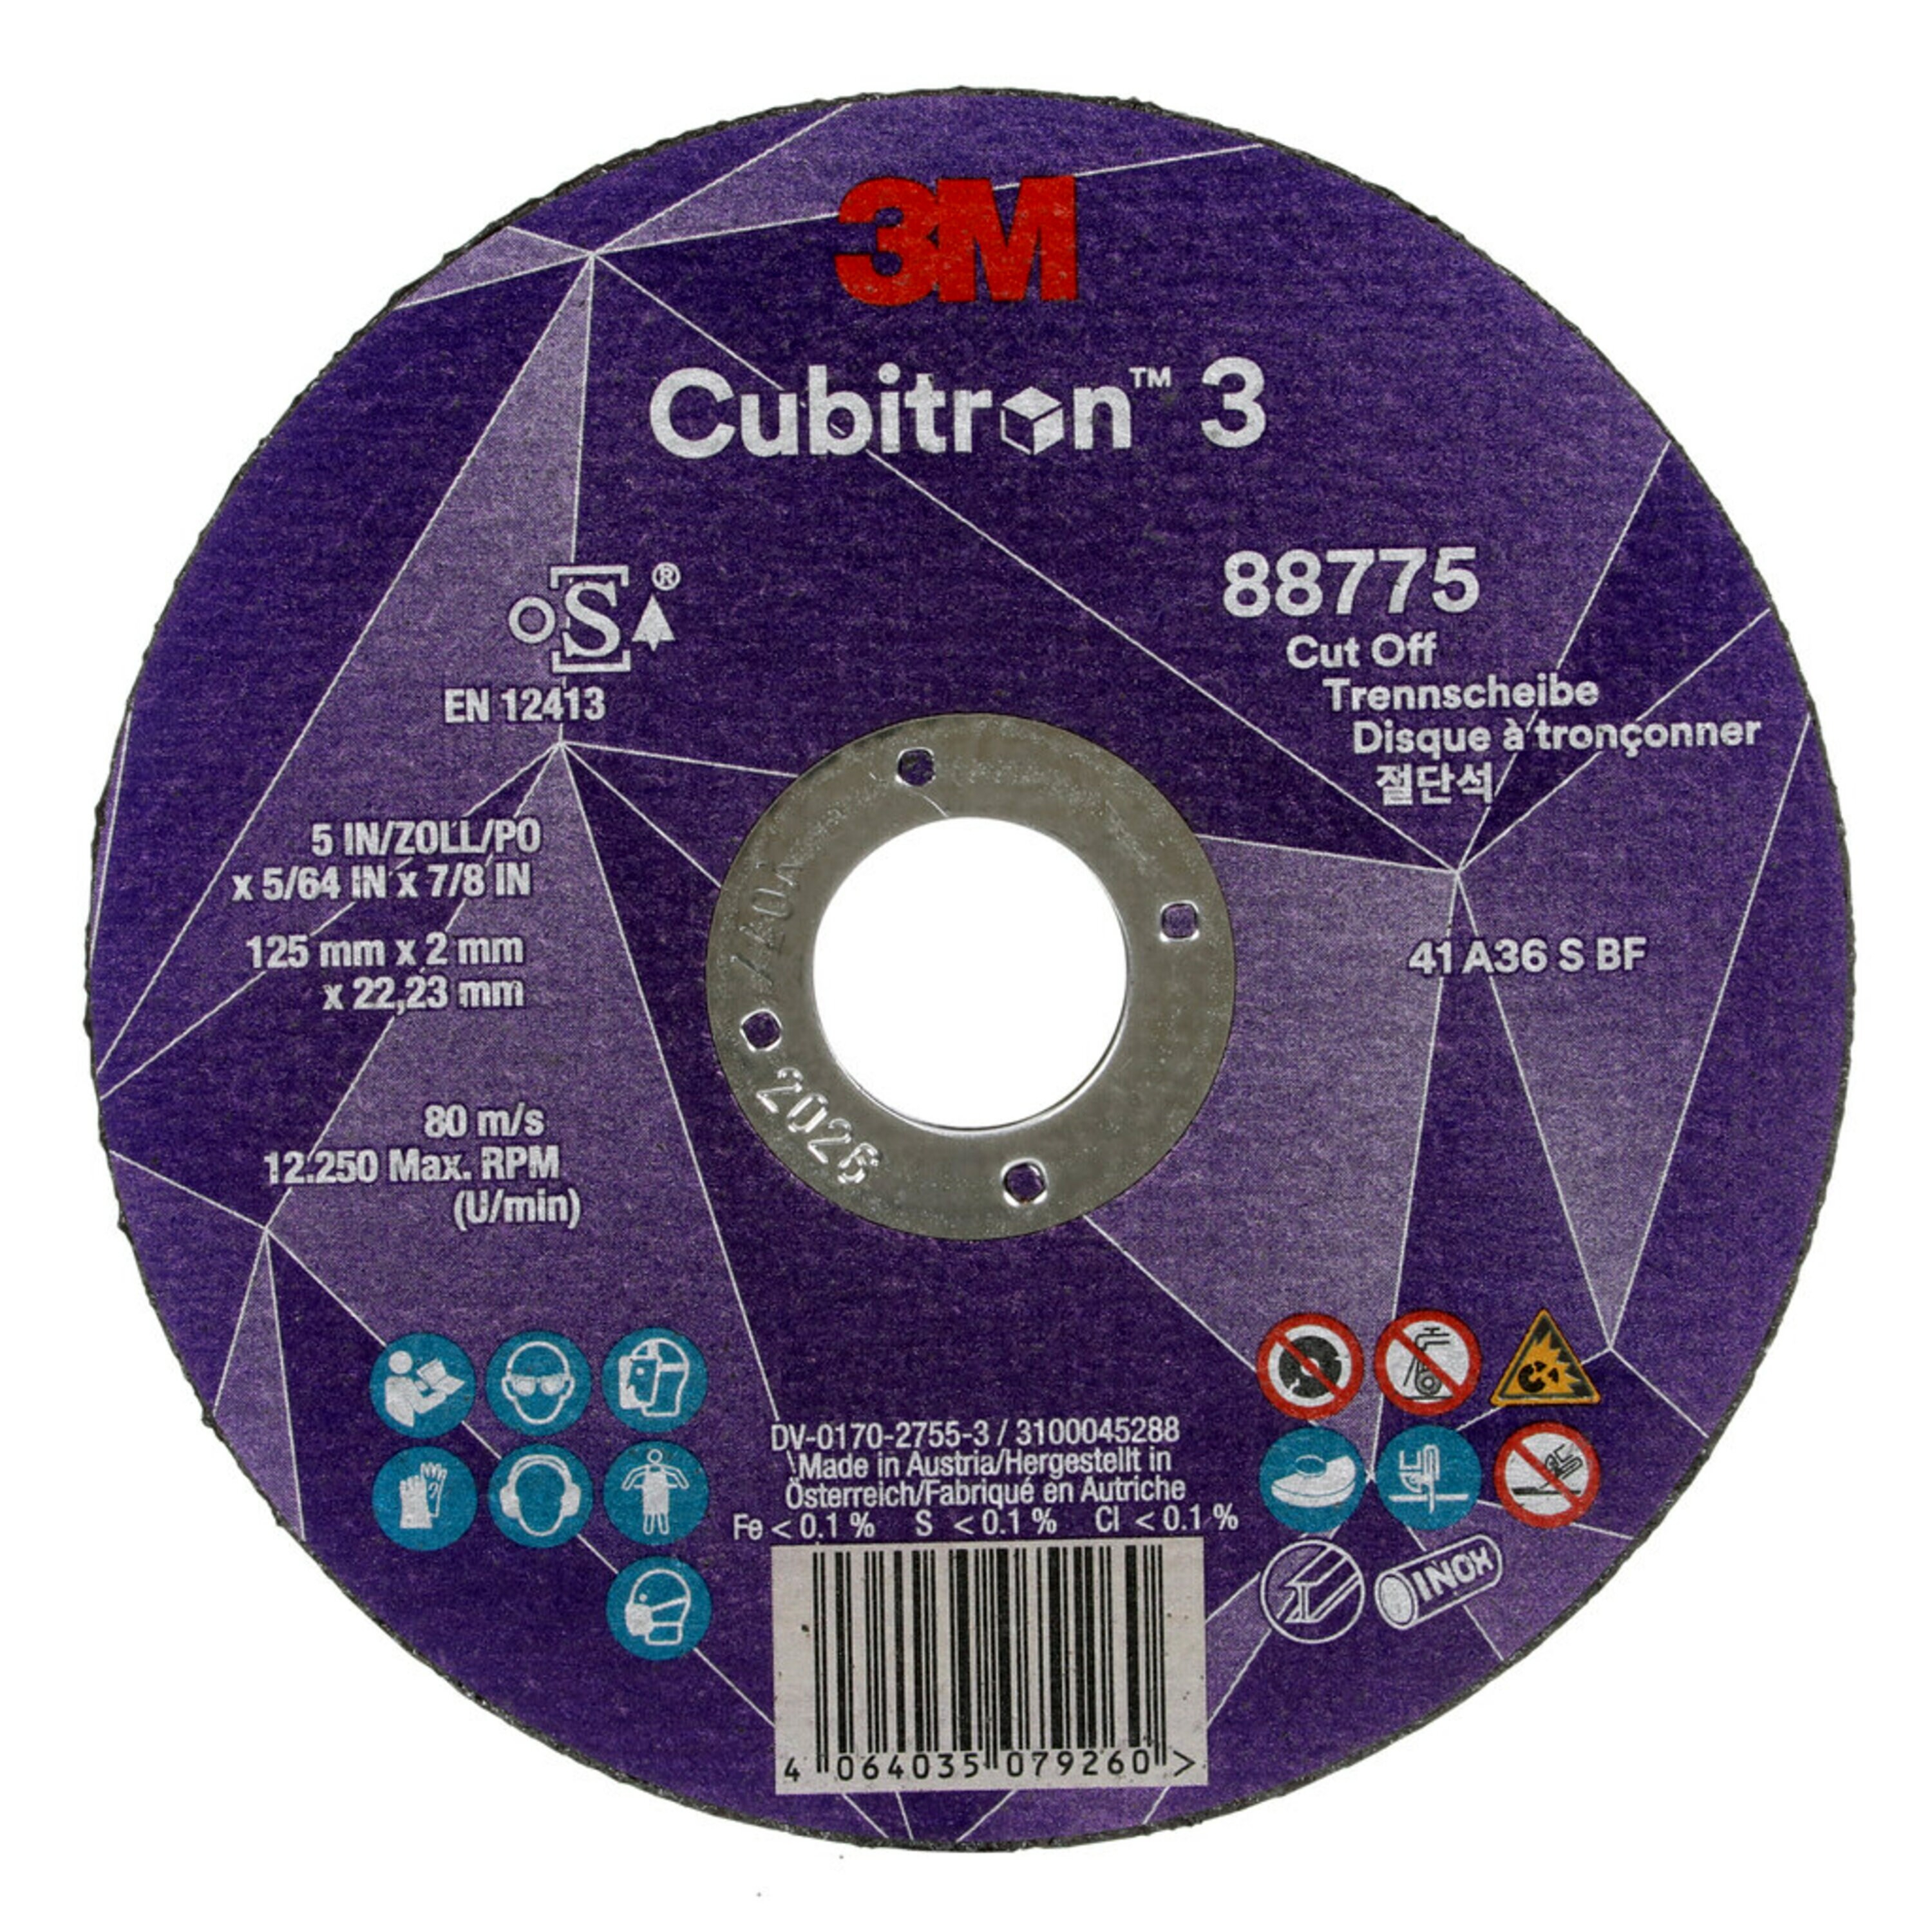 3M Cubitron 3 cut-off wheel, 125 mm, 2 mm, 22.23 mm, 36 , type 41 #88775